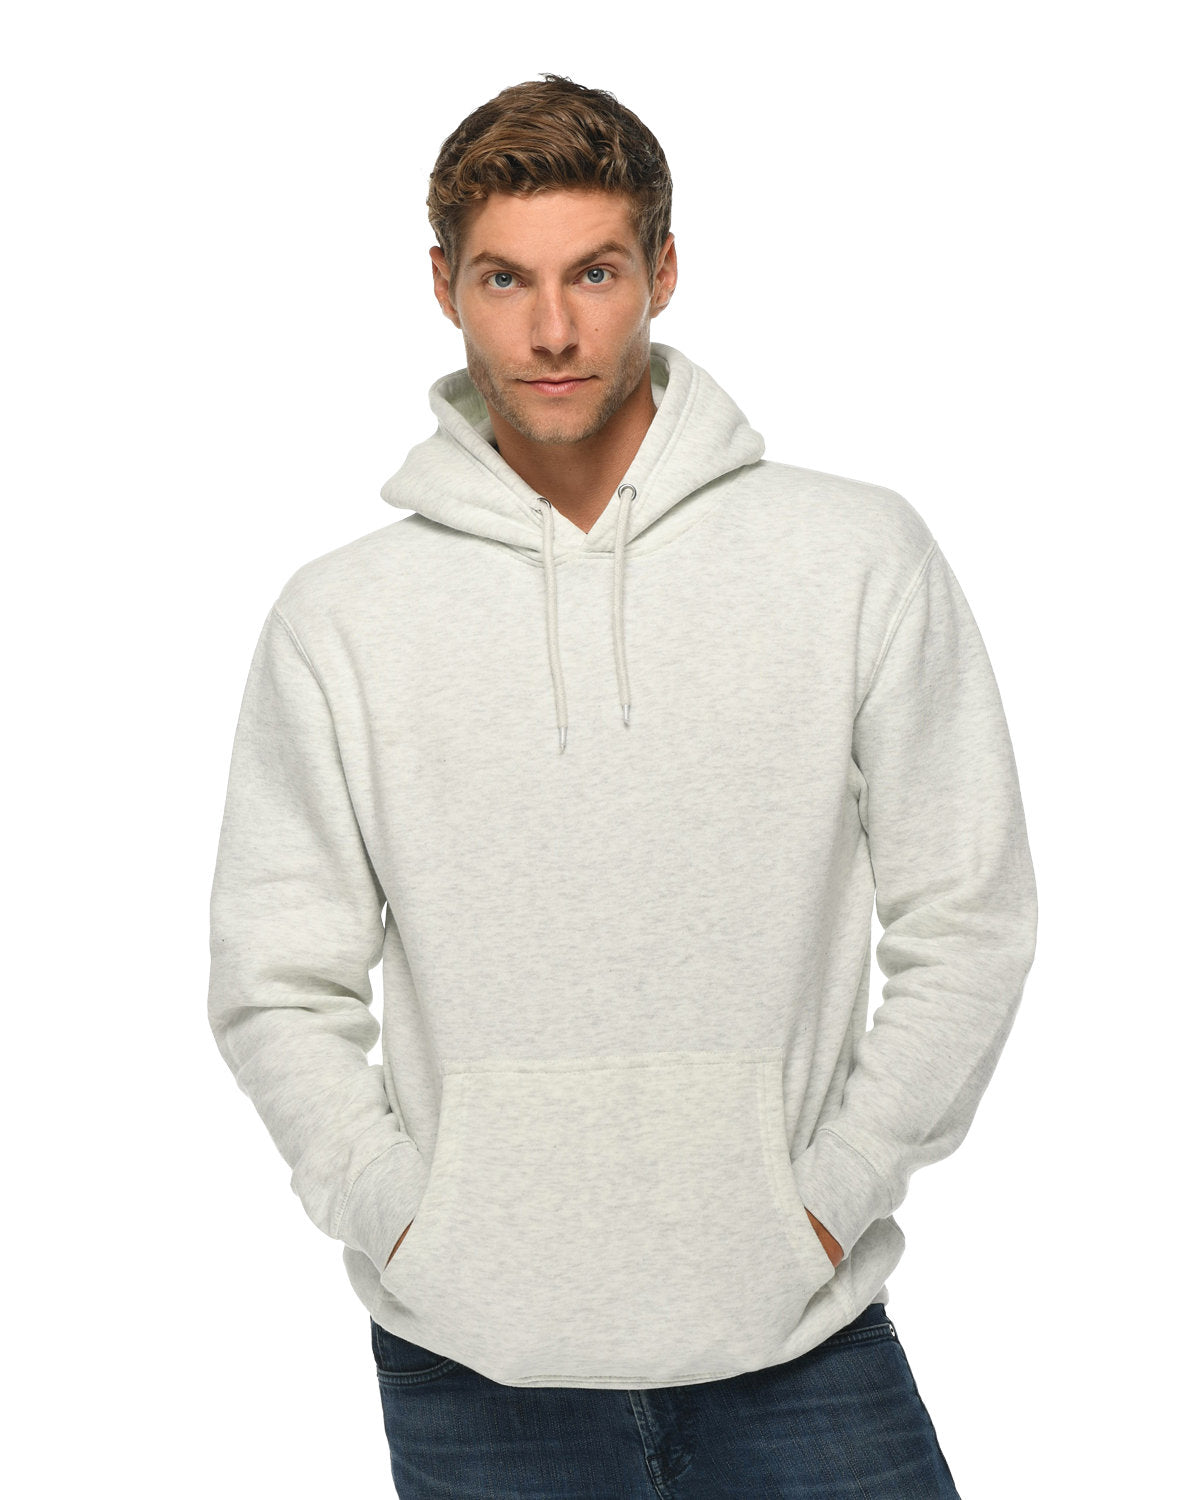 LS14001 Lane Seven Unisex Premium Pullover Hooded Sweatshirt-XS-3XL